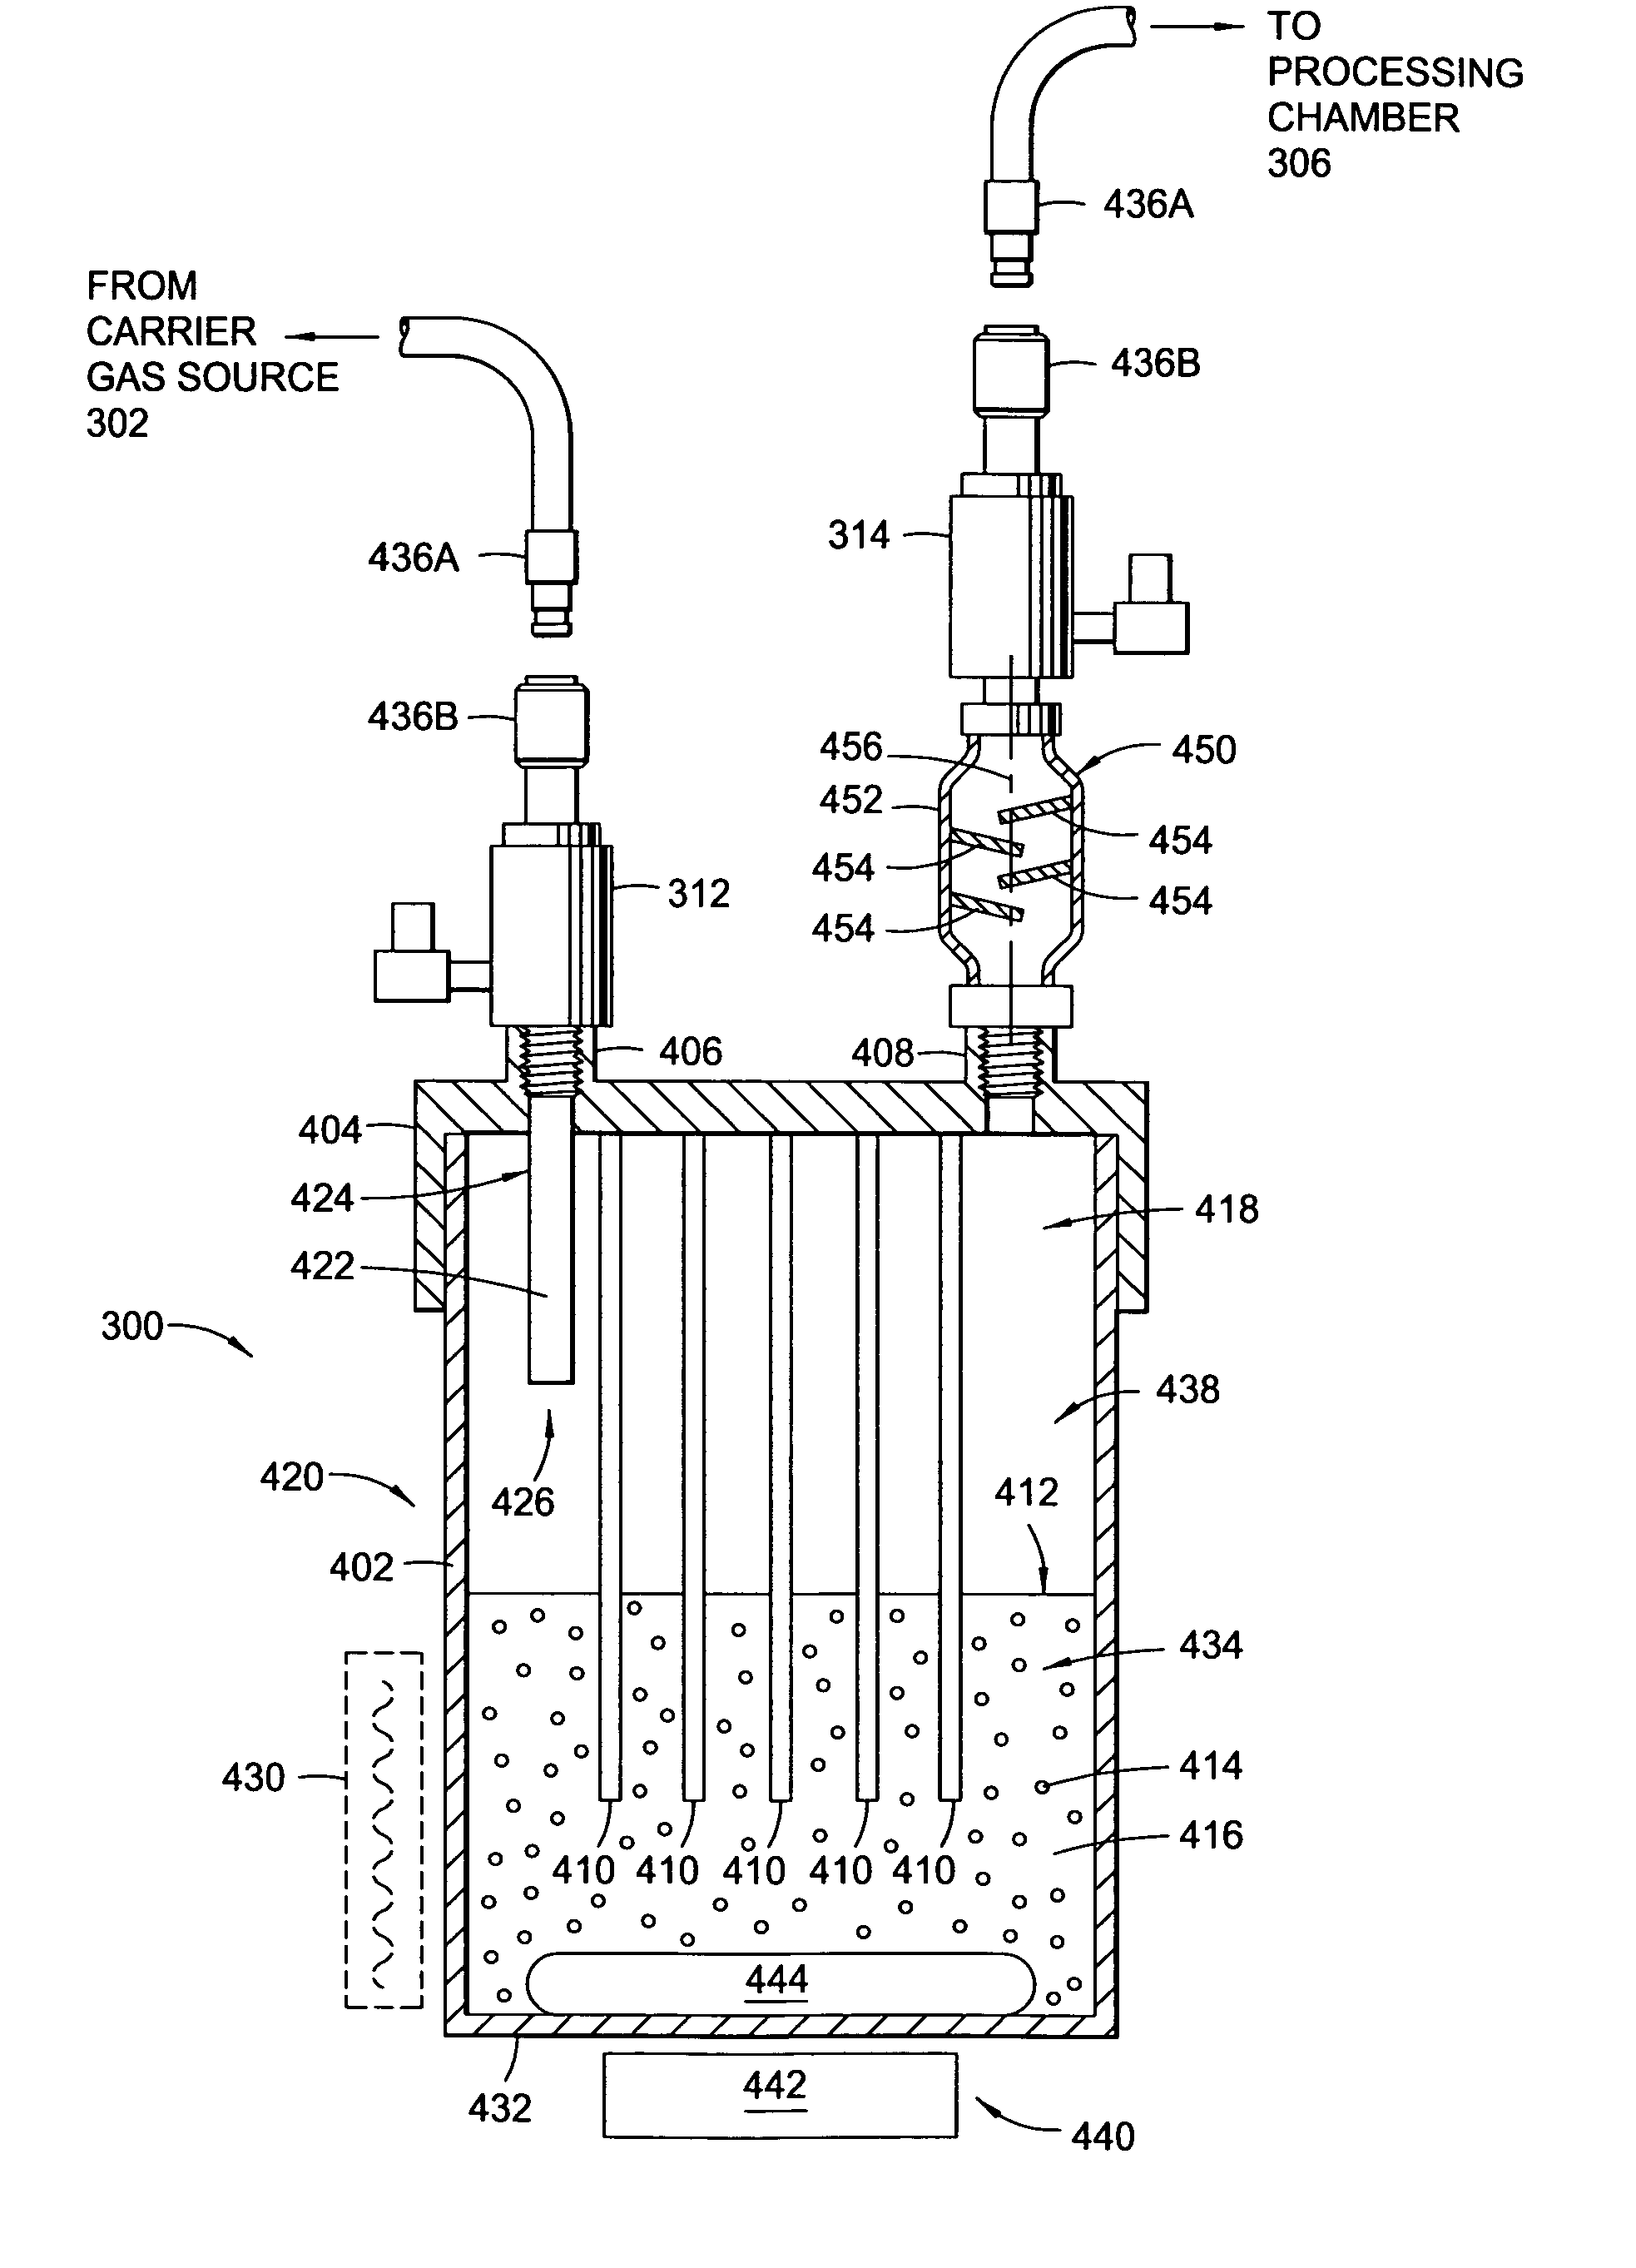 Method and apparatus of generating PDMAT precursor